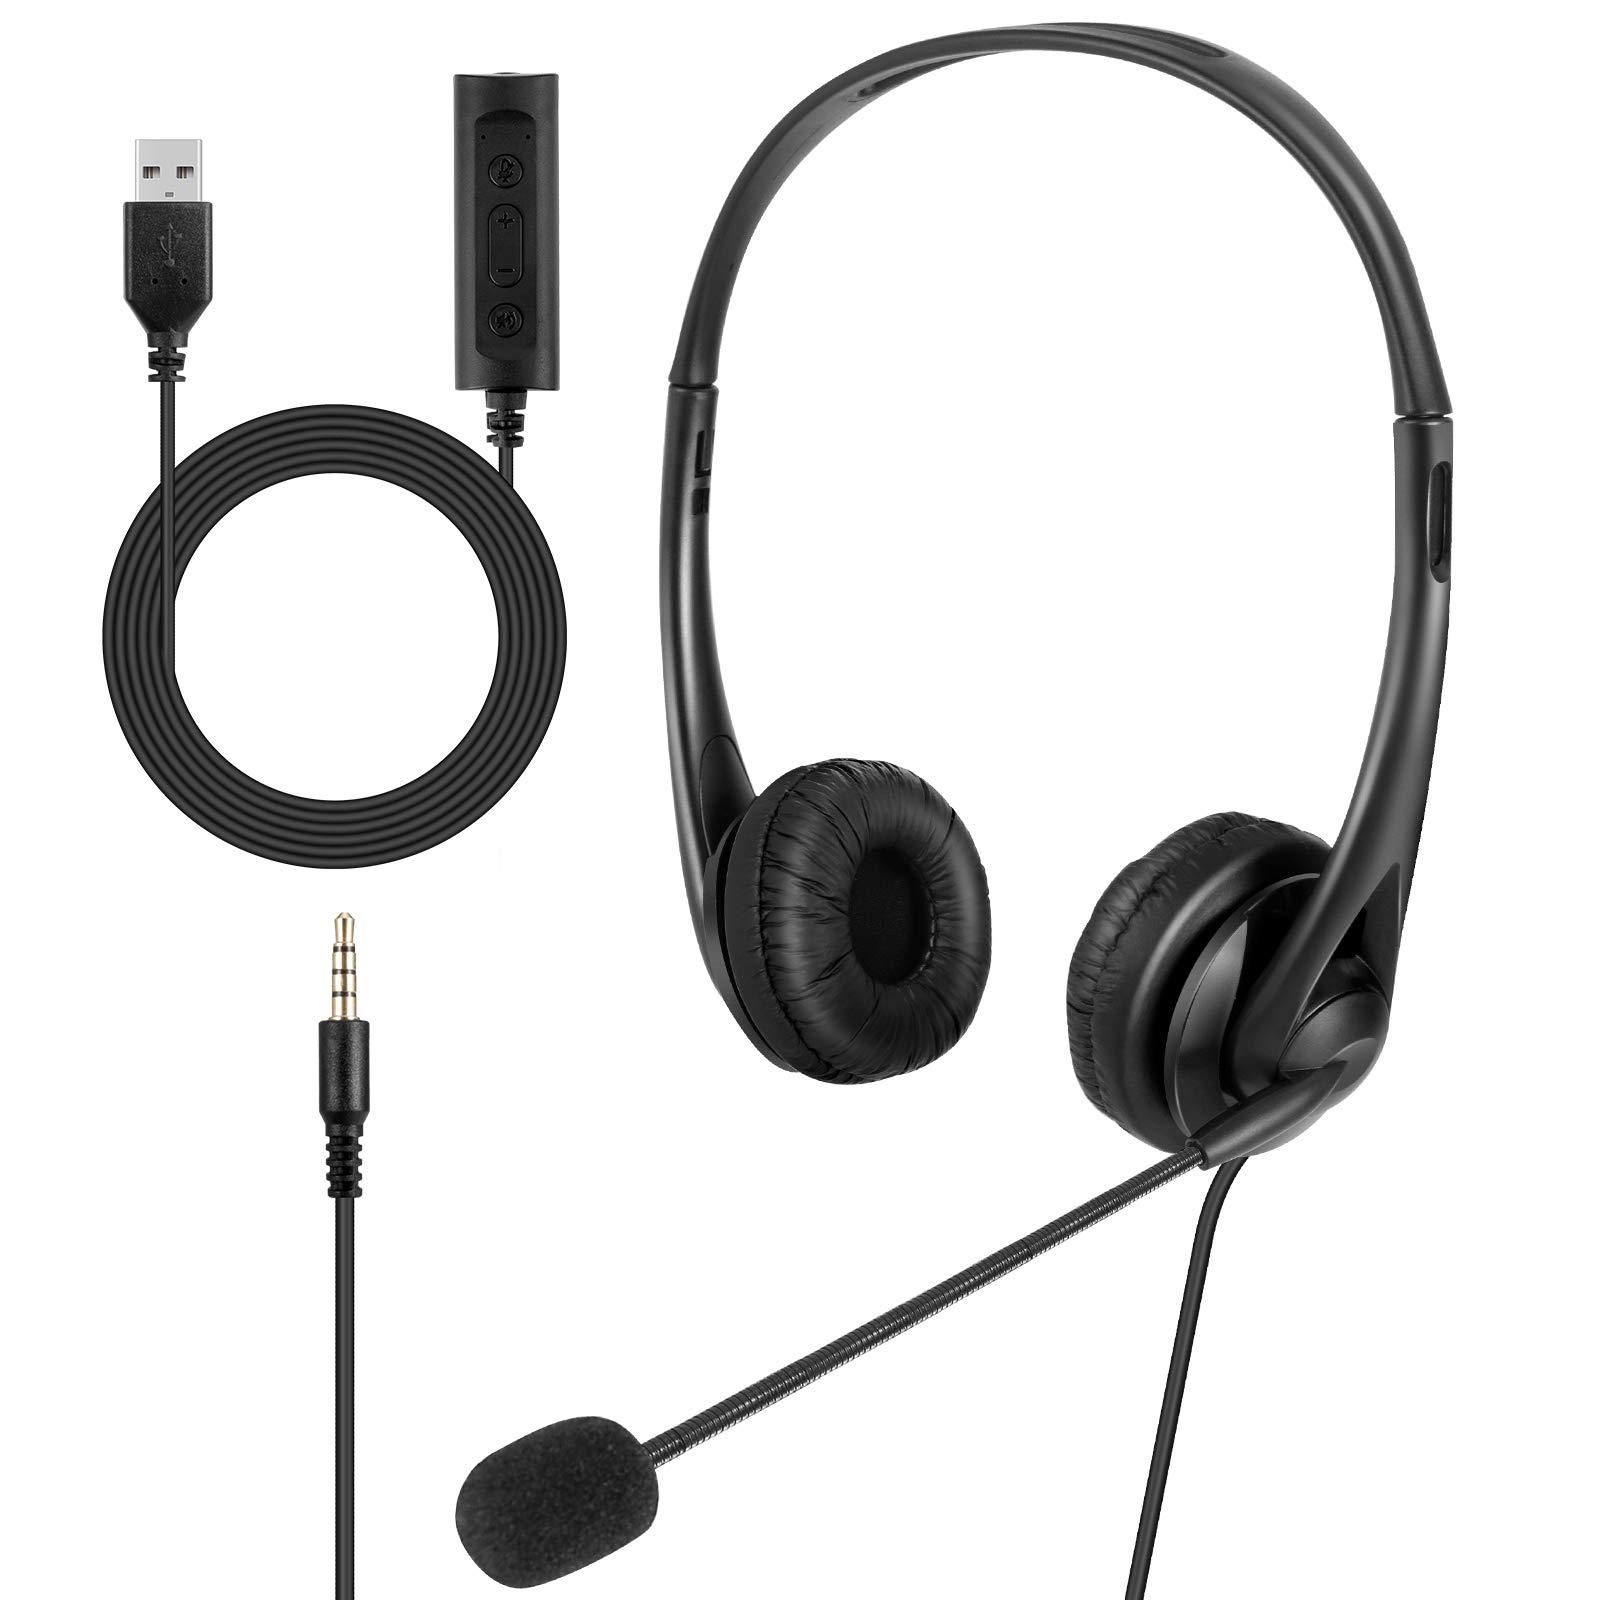 Queen.Y Kabelgebundenes Headset mit Mikrofon 3. 5 Mm/USB-Stecker Over-Ear-Geräuschunterdrückung Leichter Kopfhörer mit Mikrofon-Lautstärkeregler für PC-Handy-Skype Webinar-Callcenter